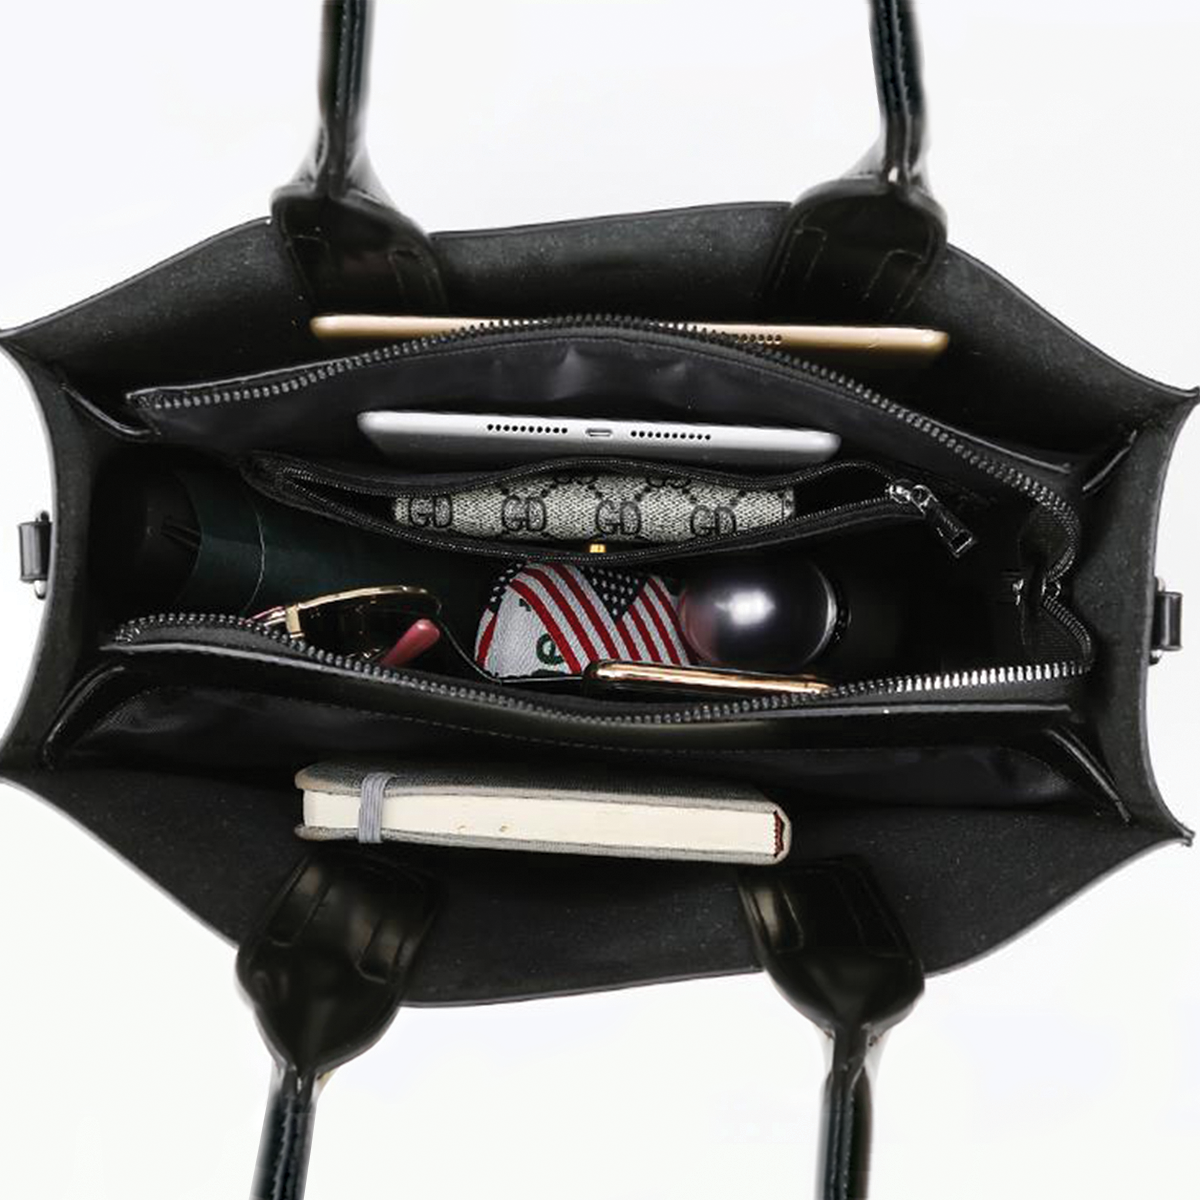 Black And White British Shorthair Cat Luxury Handbag V1